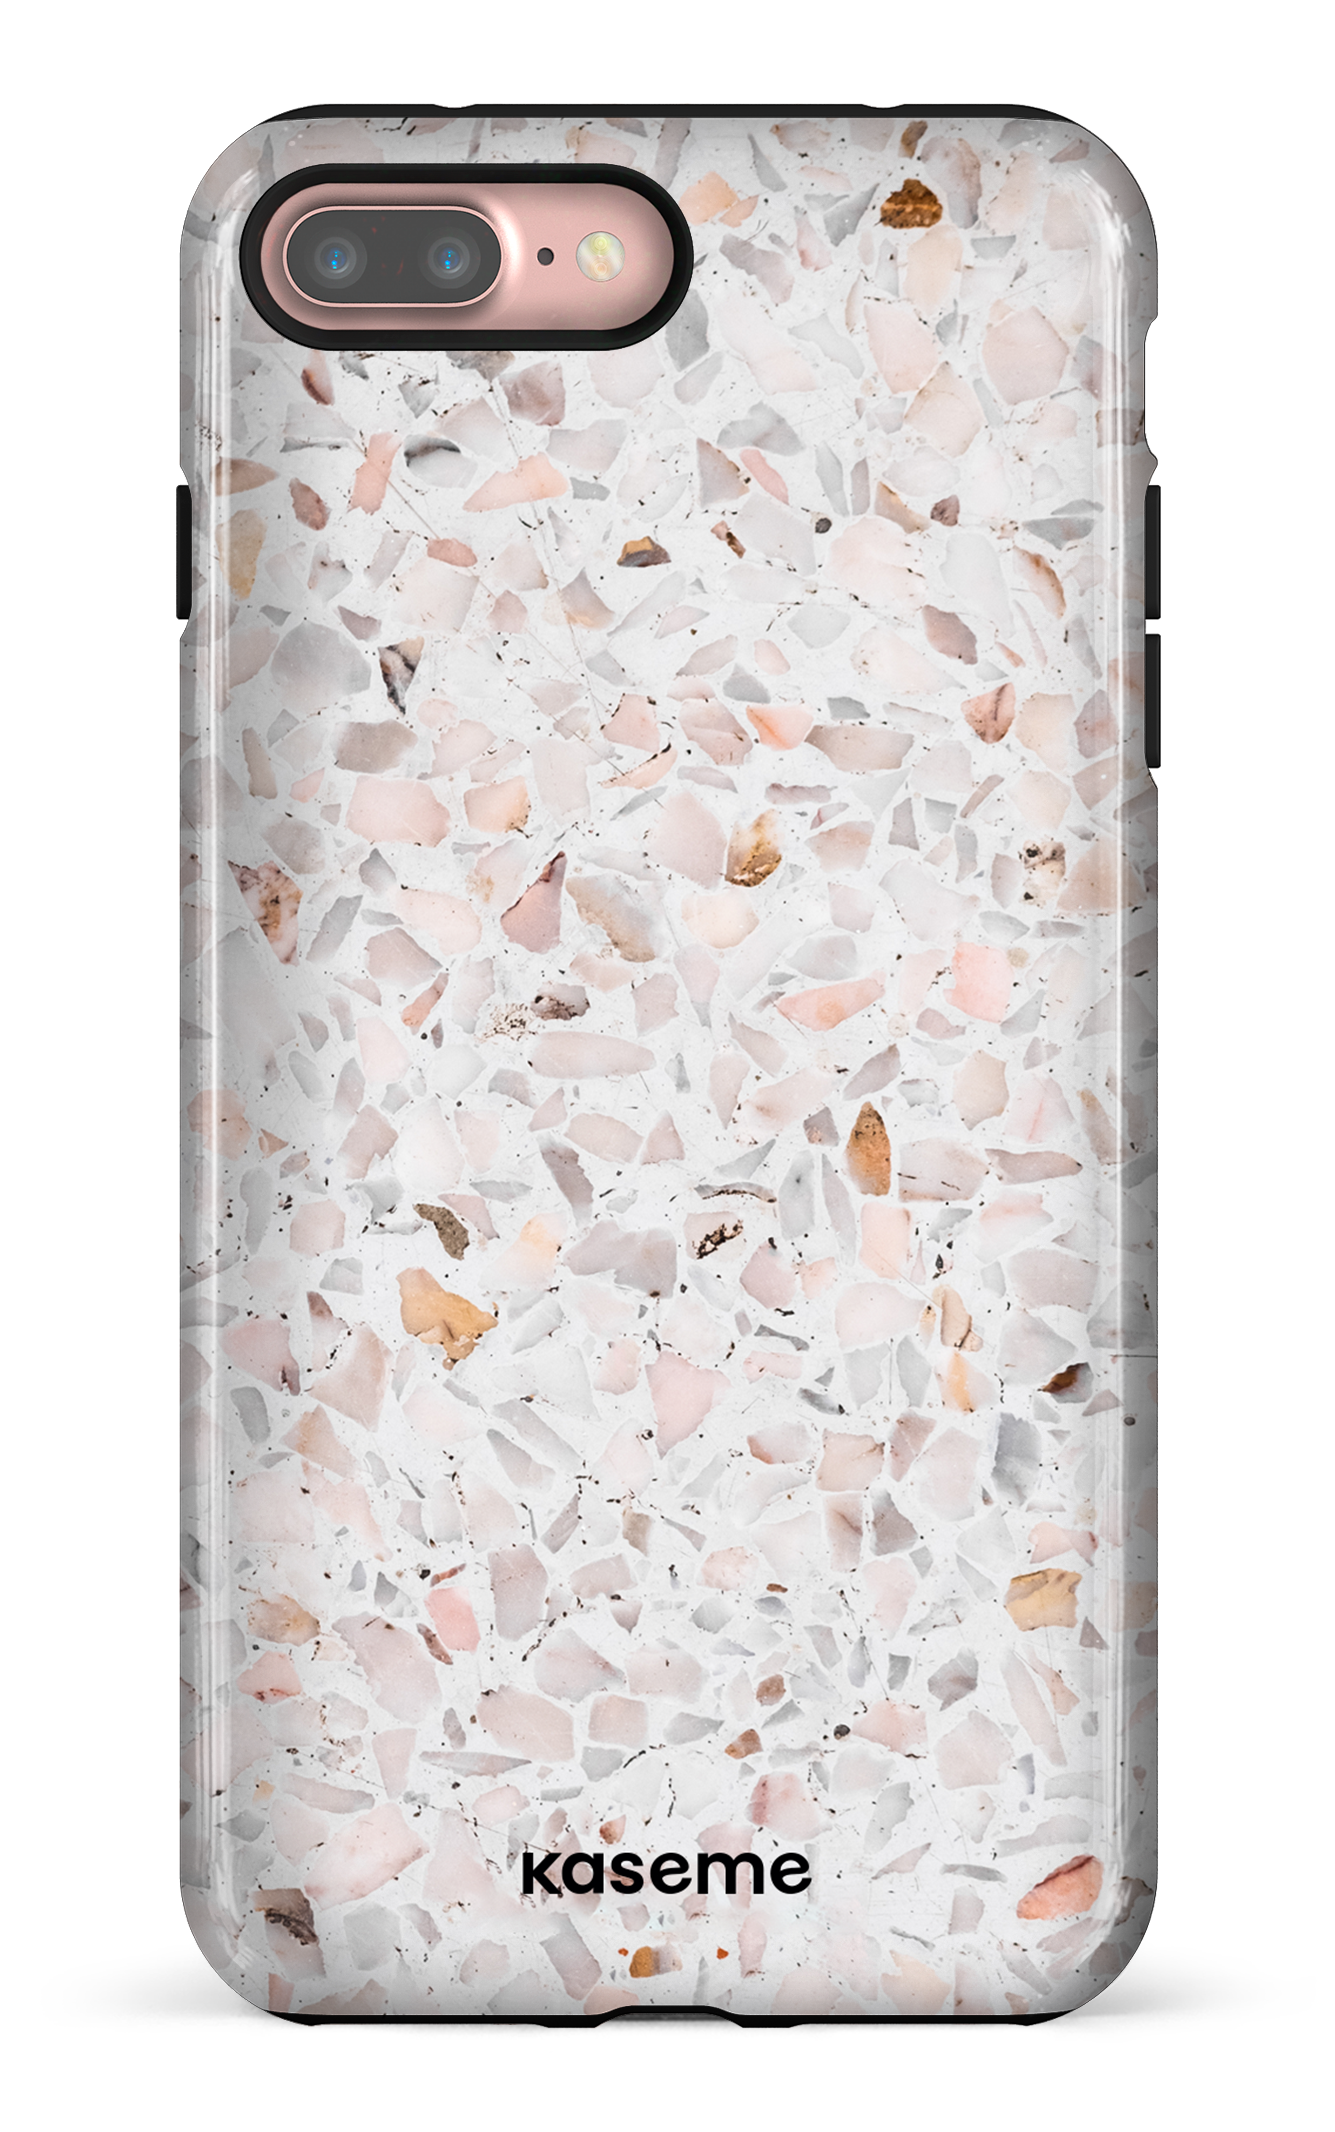 Frozen stone - iPhone 7 Plus